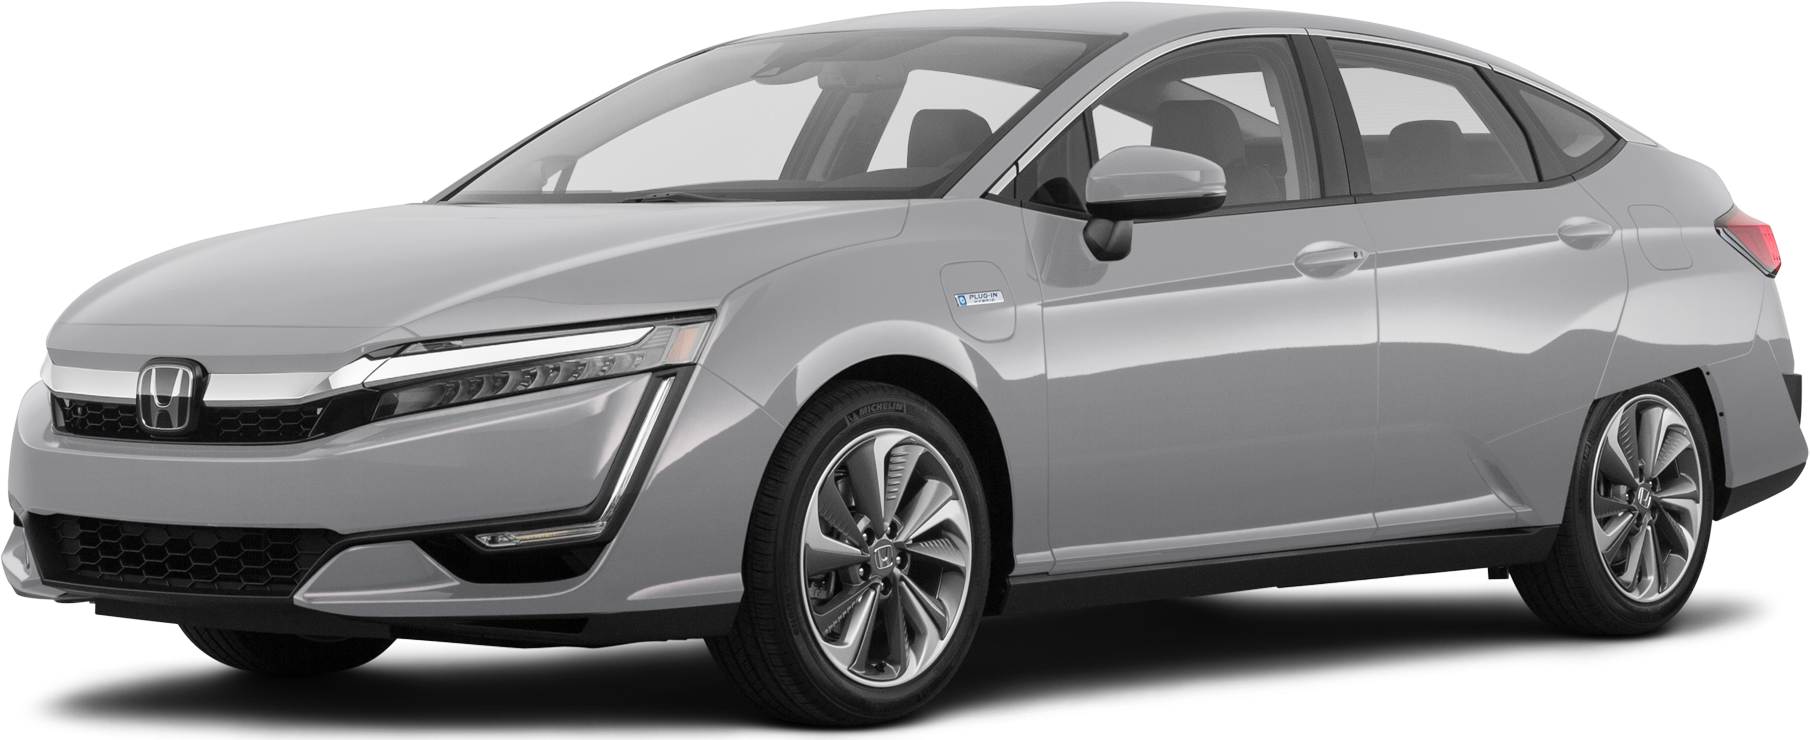 Honda Clarity Plug In Hybrid Values Cars For Sale Kelley Blue Book